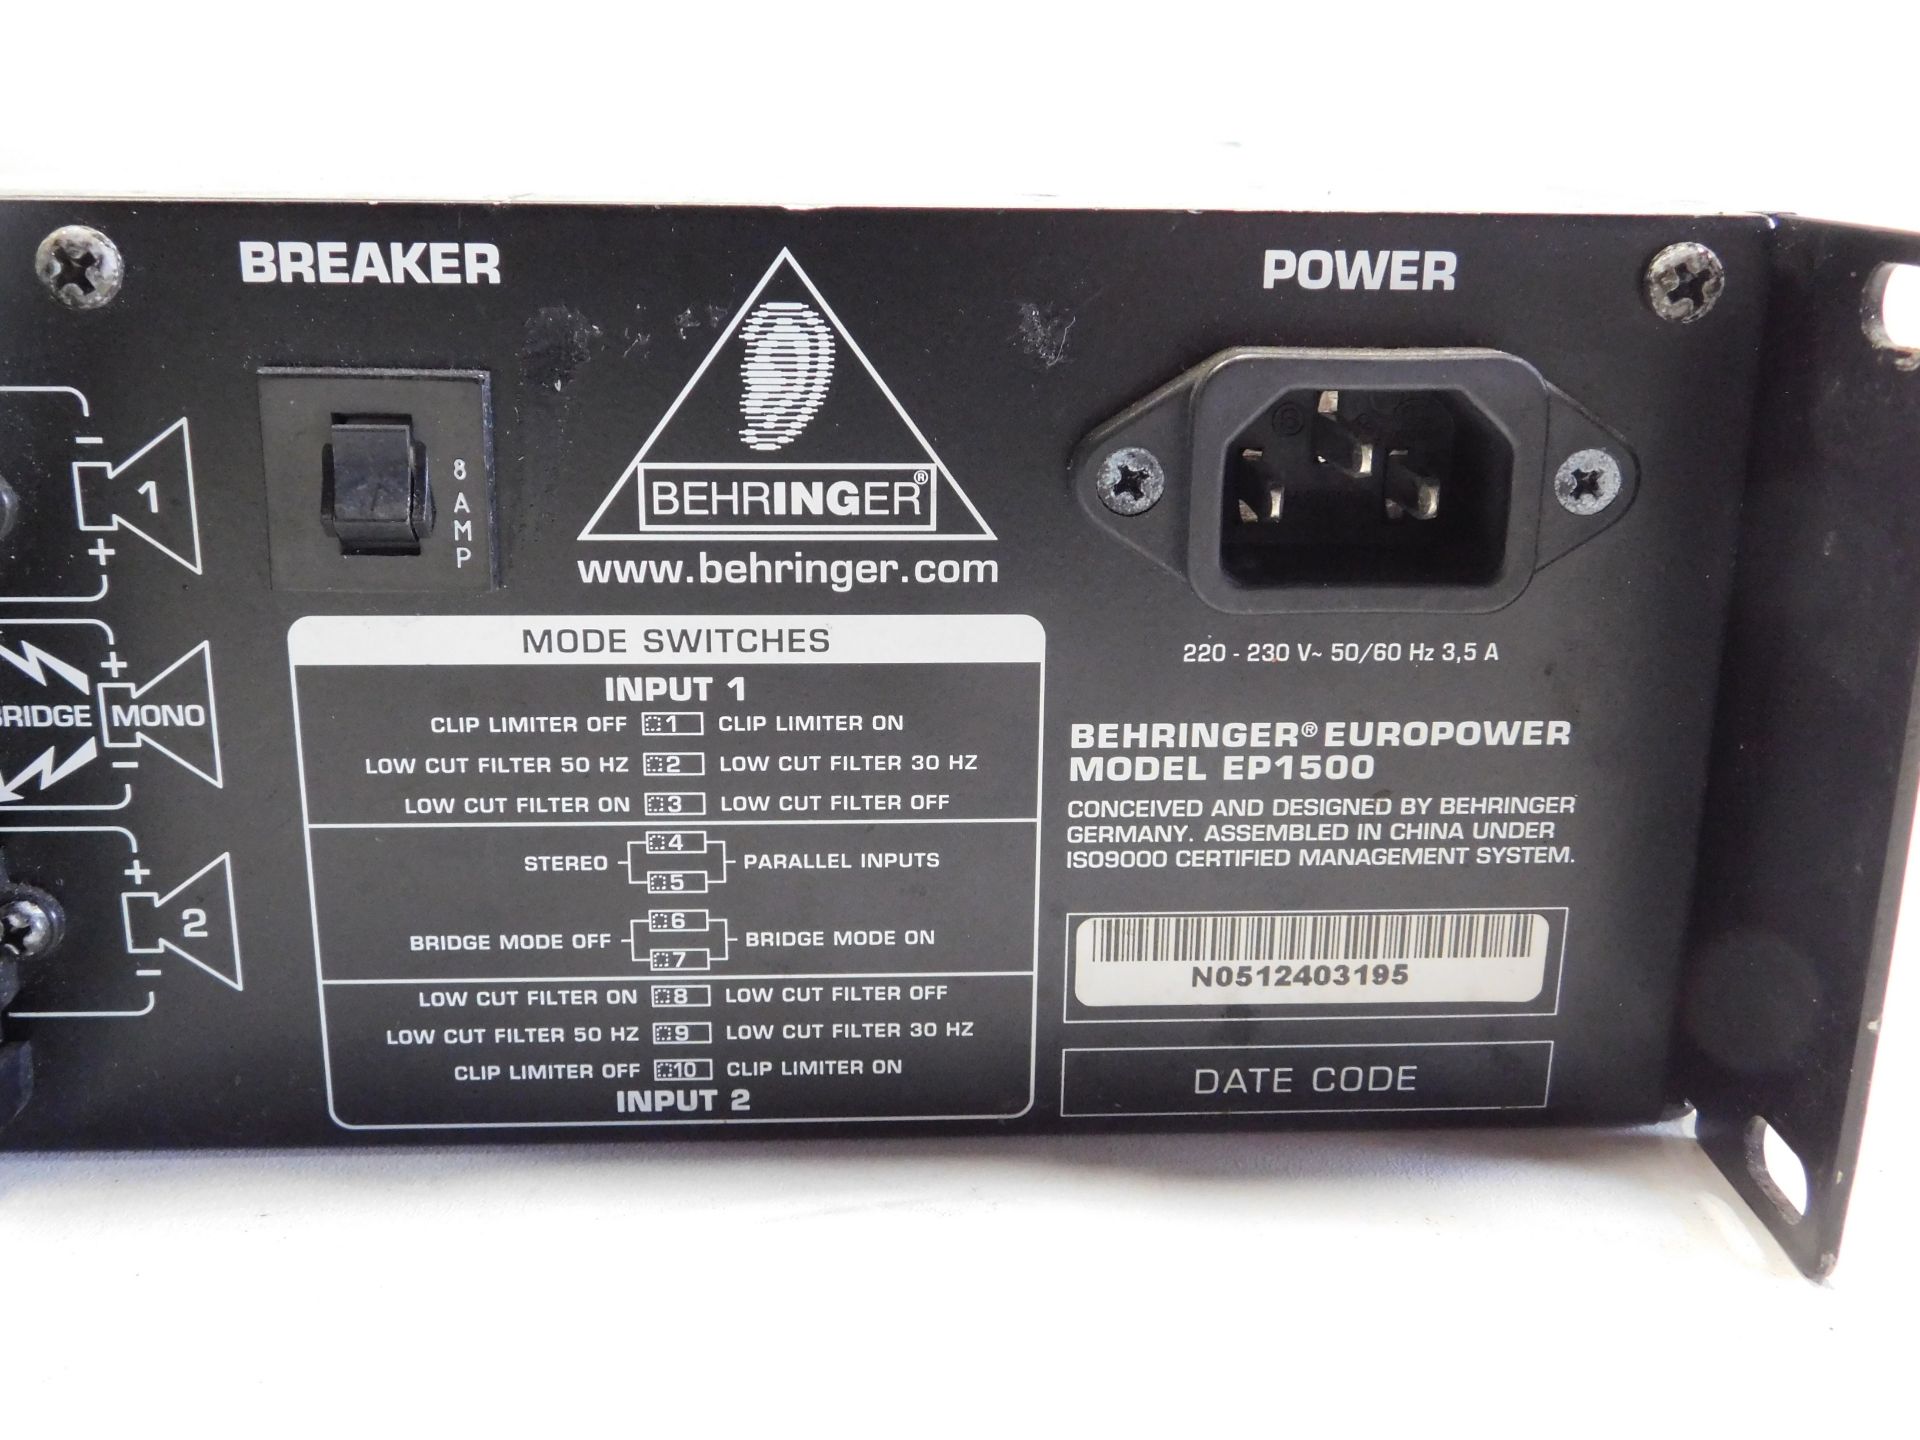 3 Behringer Europower Amplifiers, Model EP1500, 3 Behringer Europower Amplifiers, Model EP2500 & - Image 8 of 11